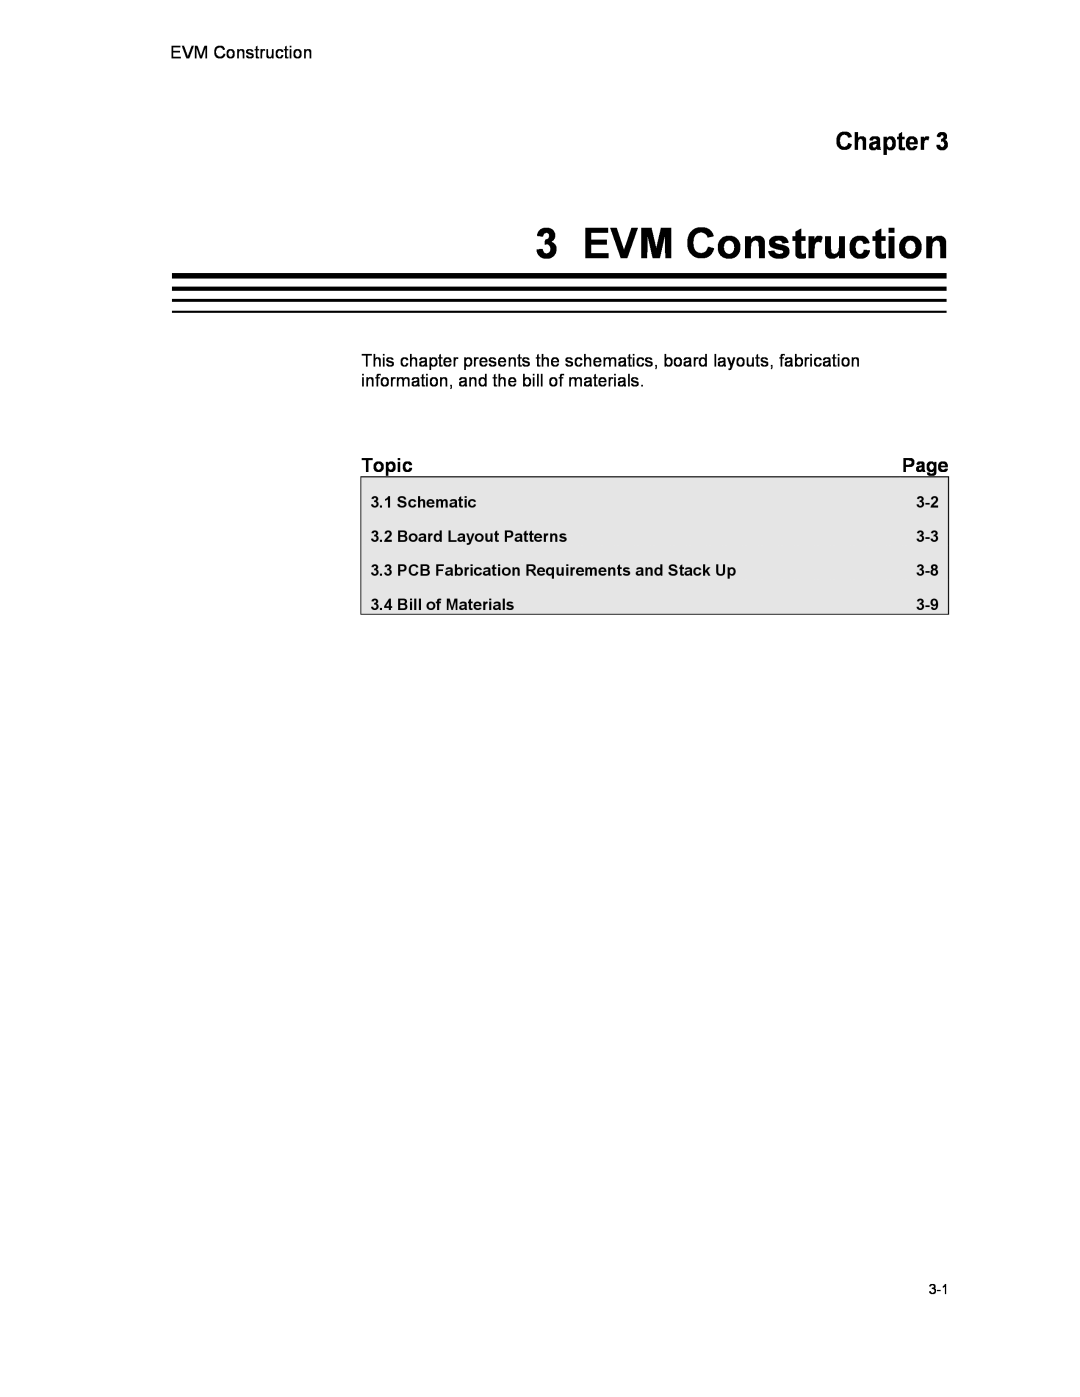 Texas Instruments HPL-D SLLU064A manual EVM Construction, Chapter 